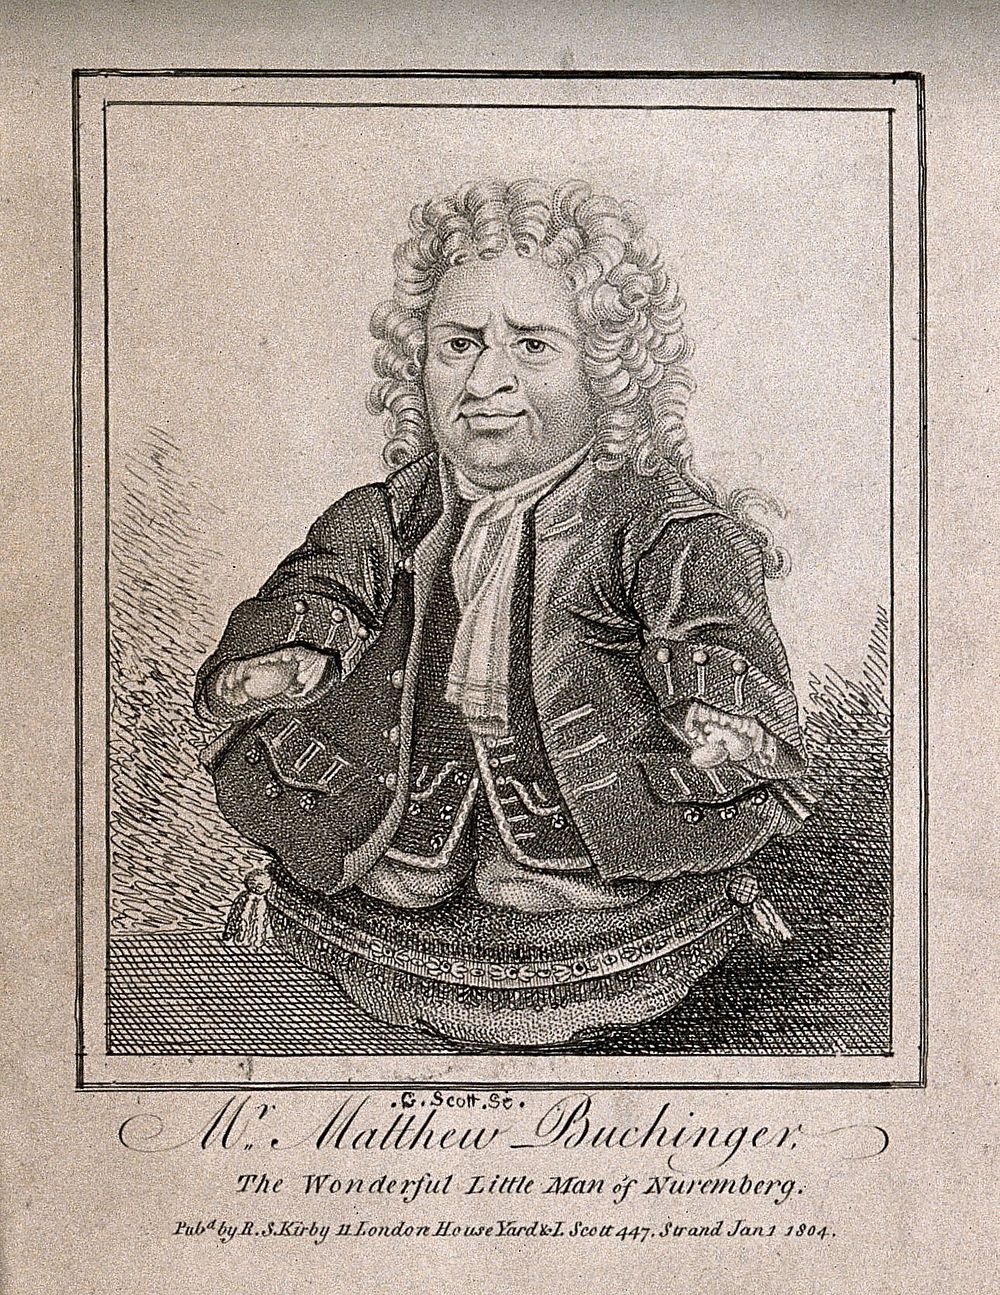 Matthias Buchinger, a phocomelic man. Etching by G. Scott, 1804.